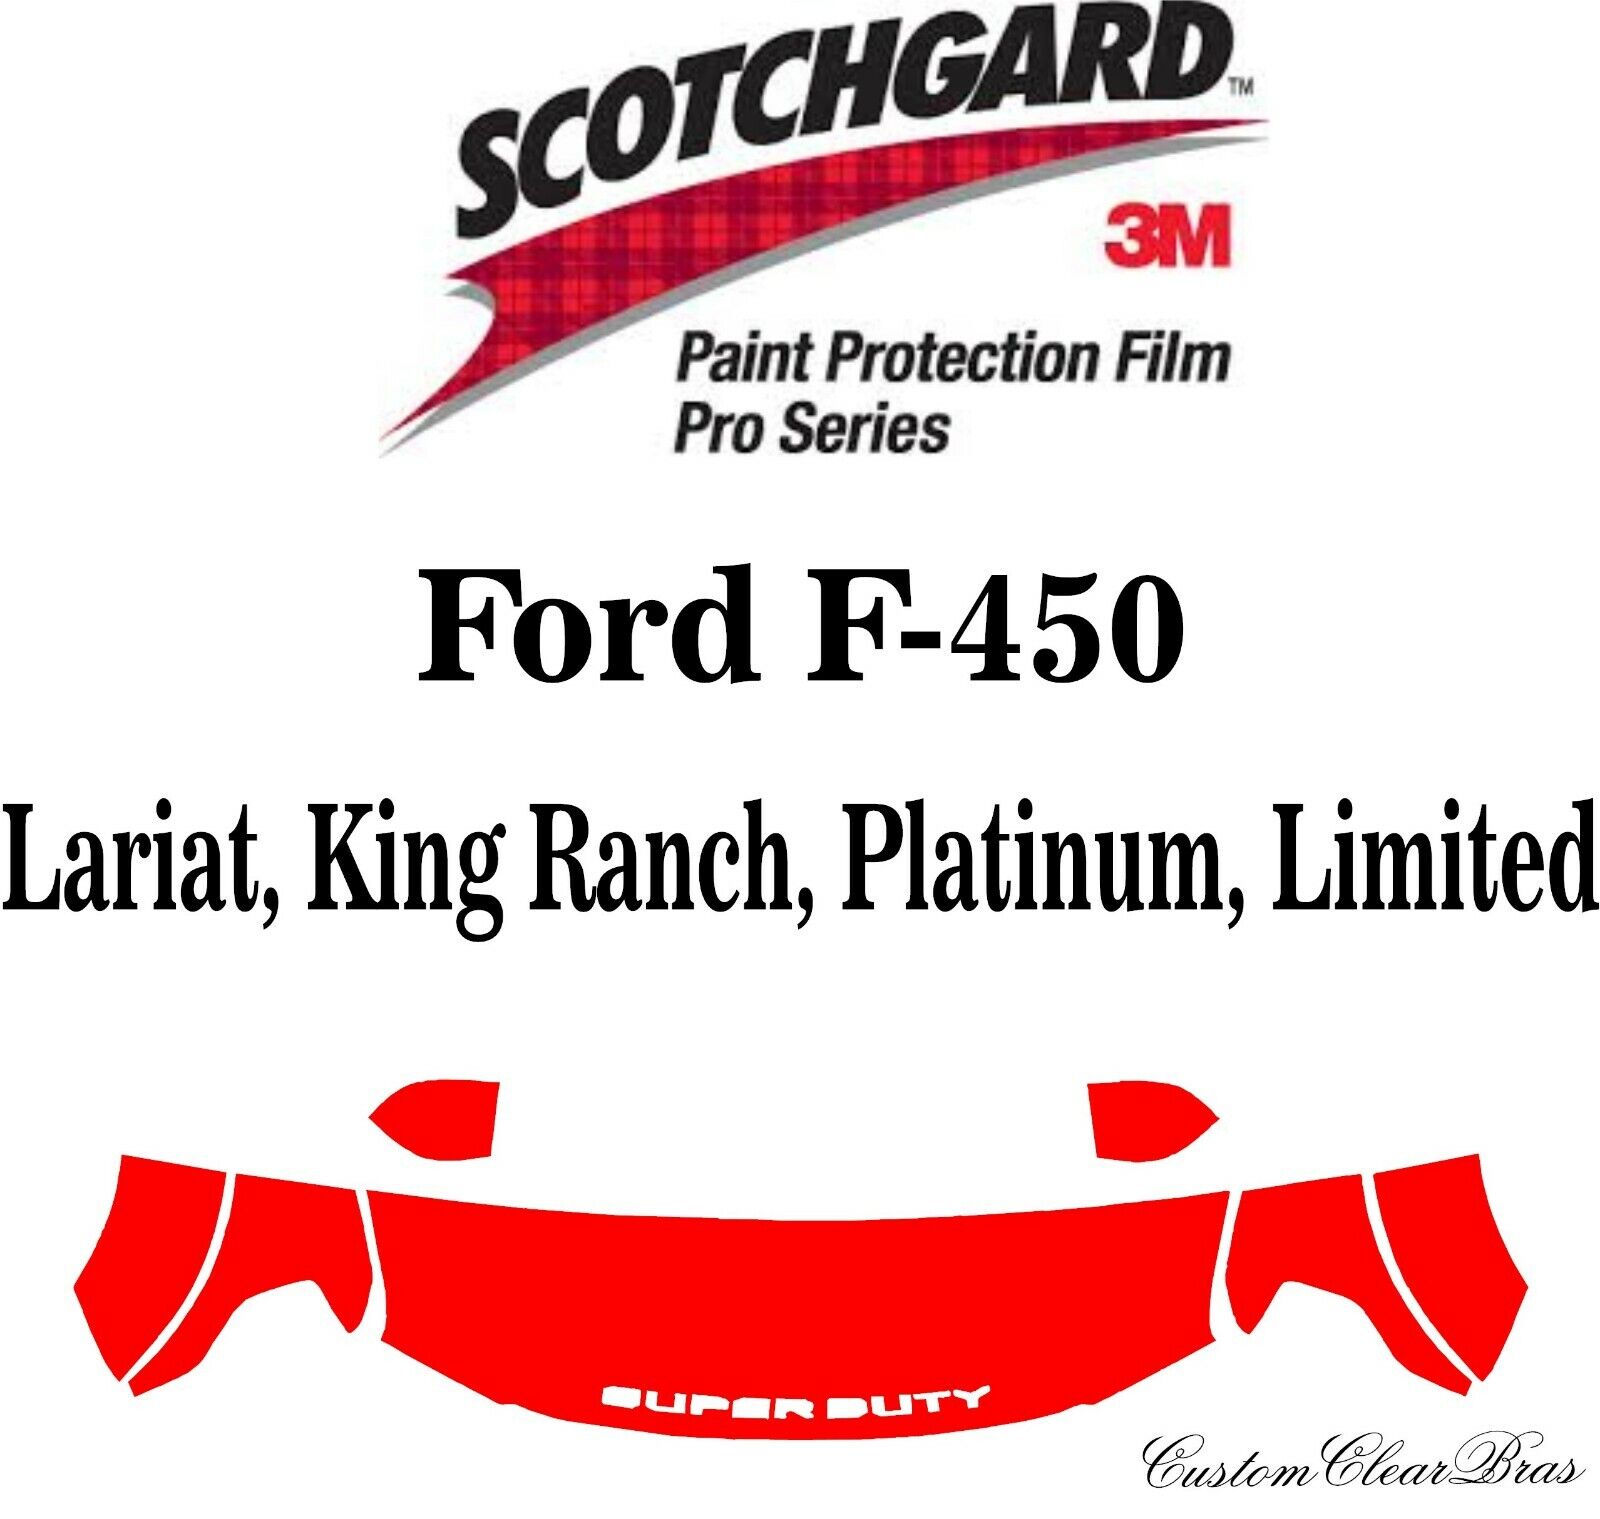 3M Scotchgard Paint Under blast sales Protection Film Pro S Bargain sale Series Ford F-450 2019